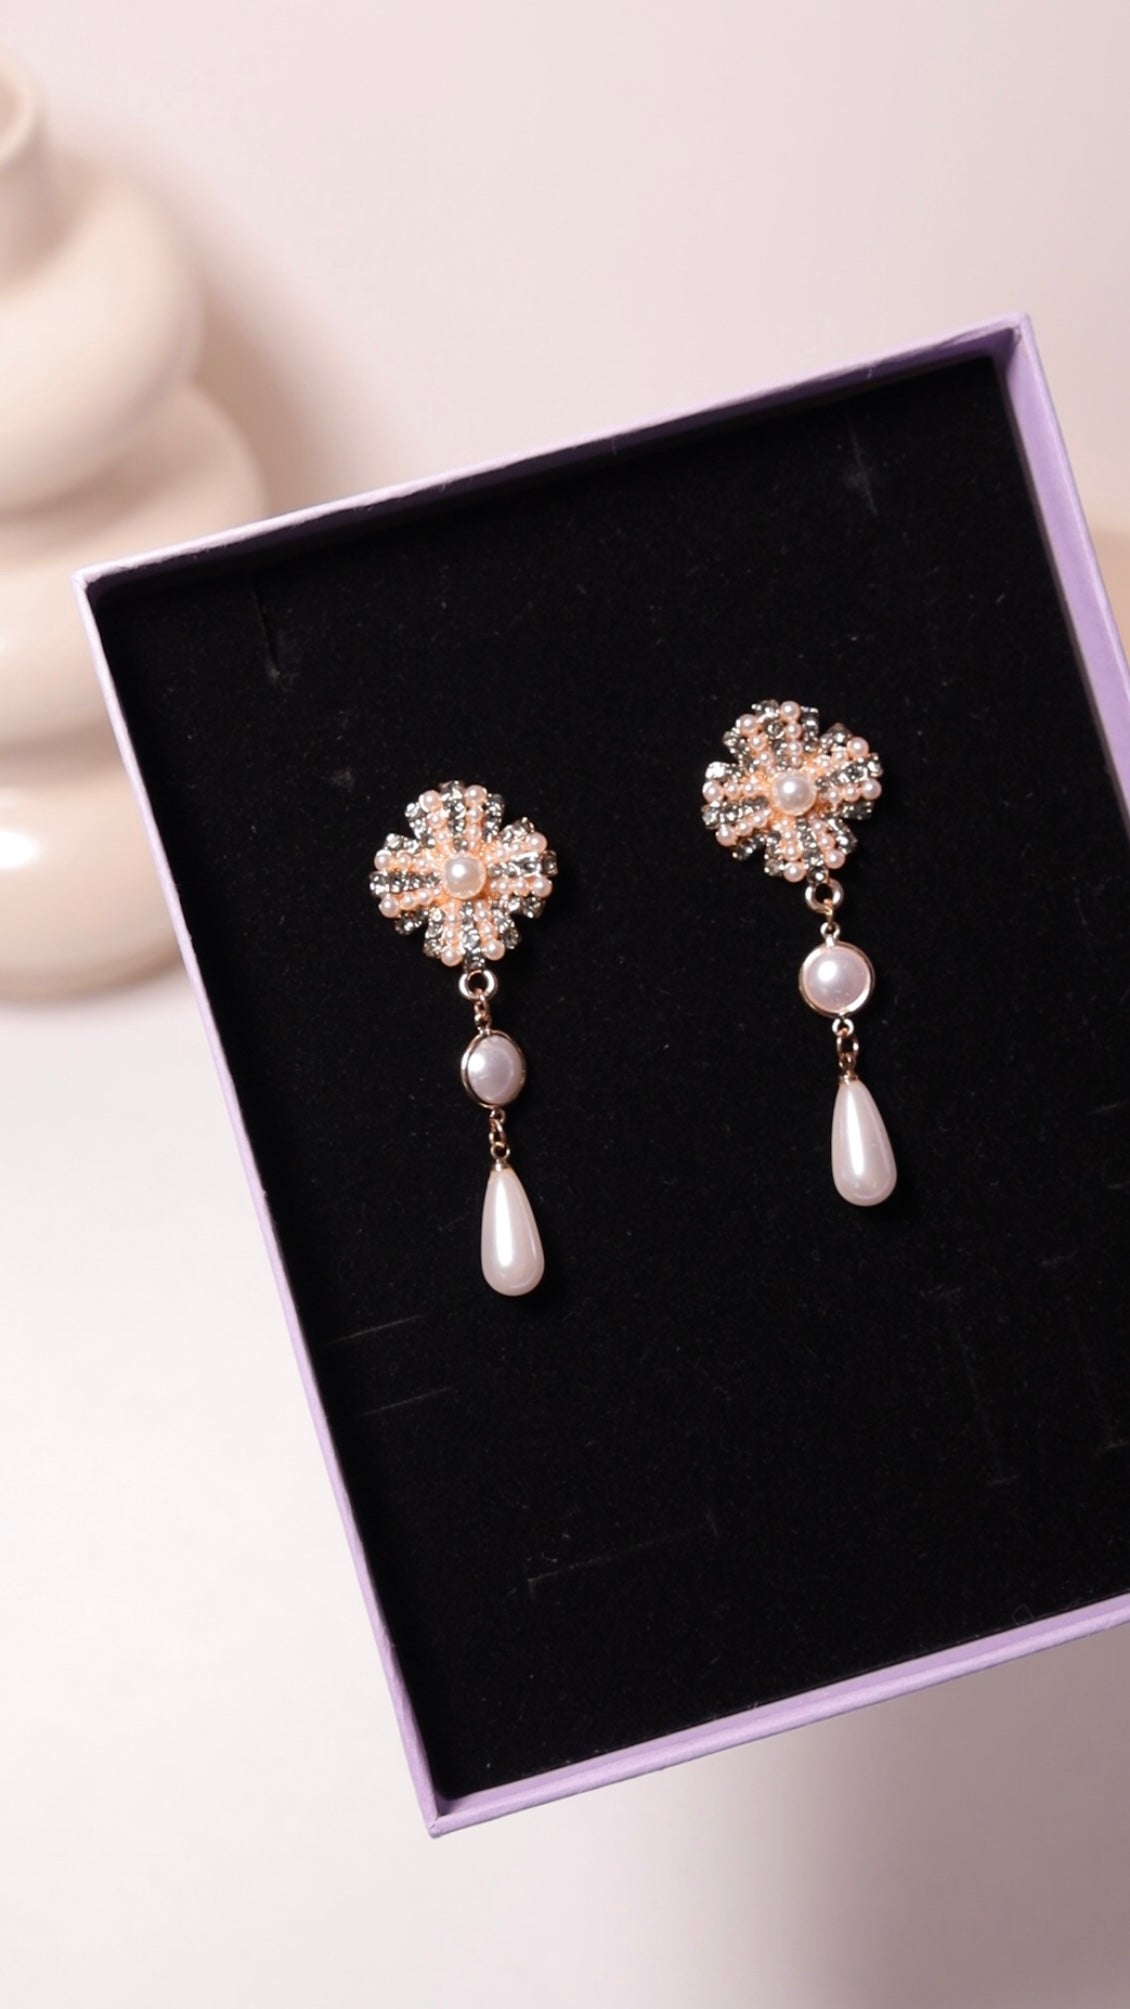 Clove pearl earrings